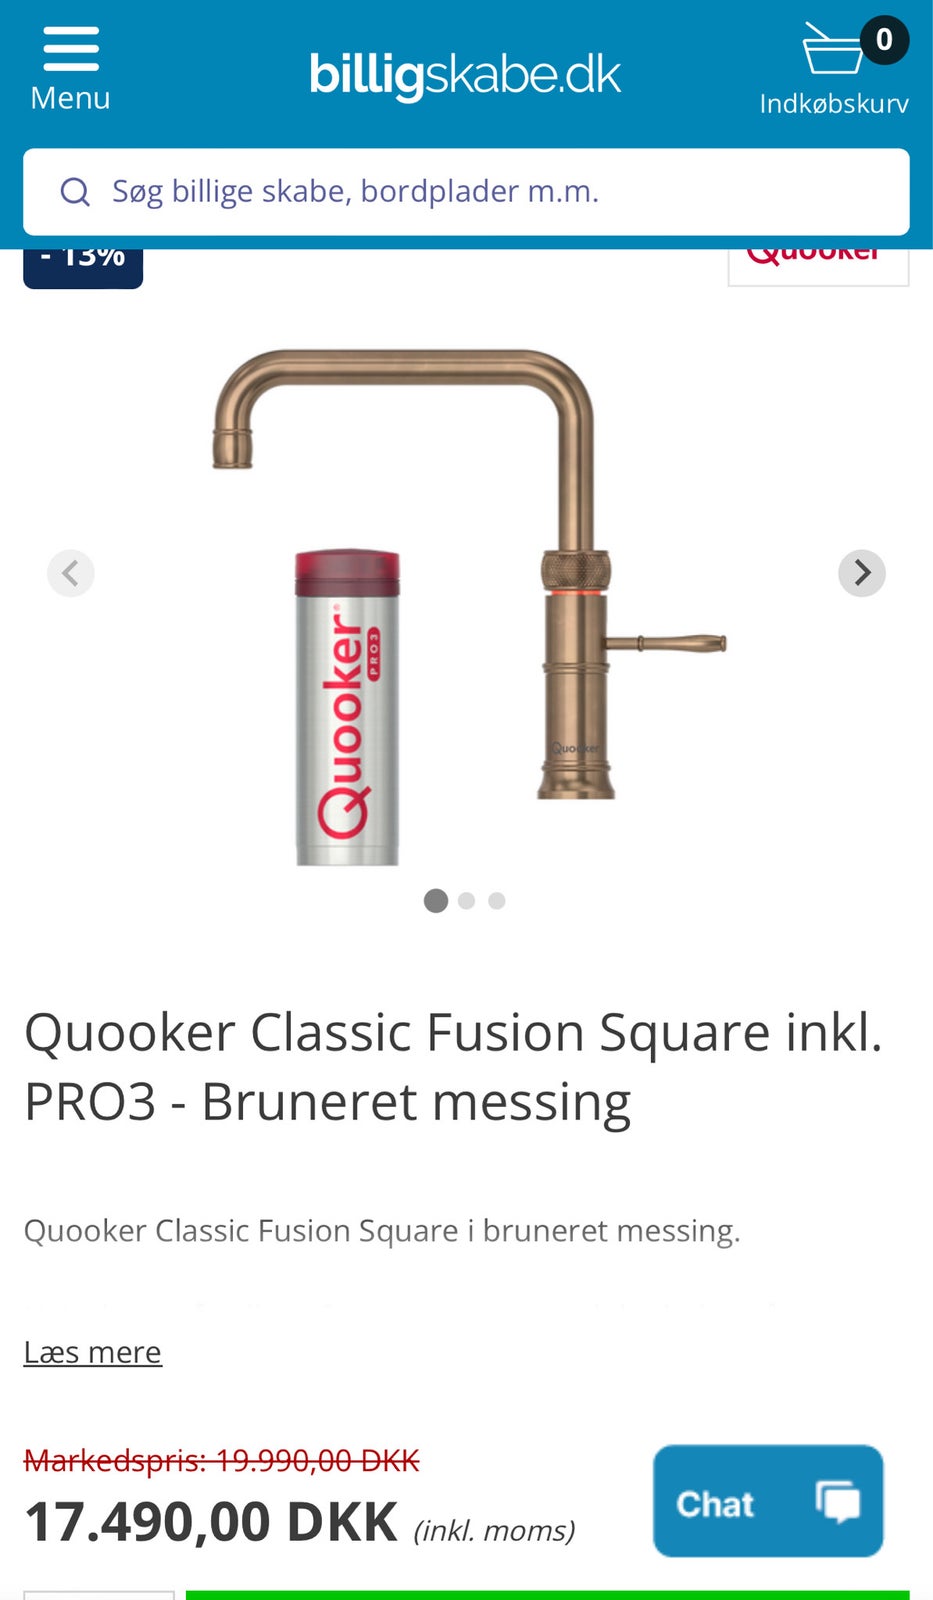 Clasic Fusion Square, Quooker, Bruneret messing